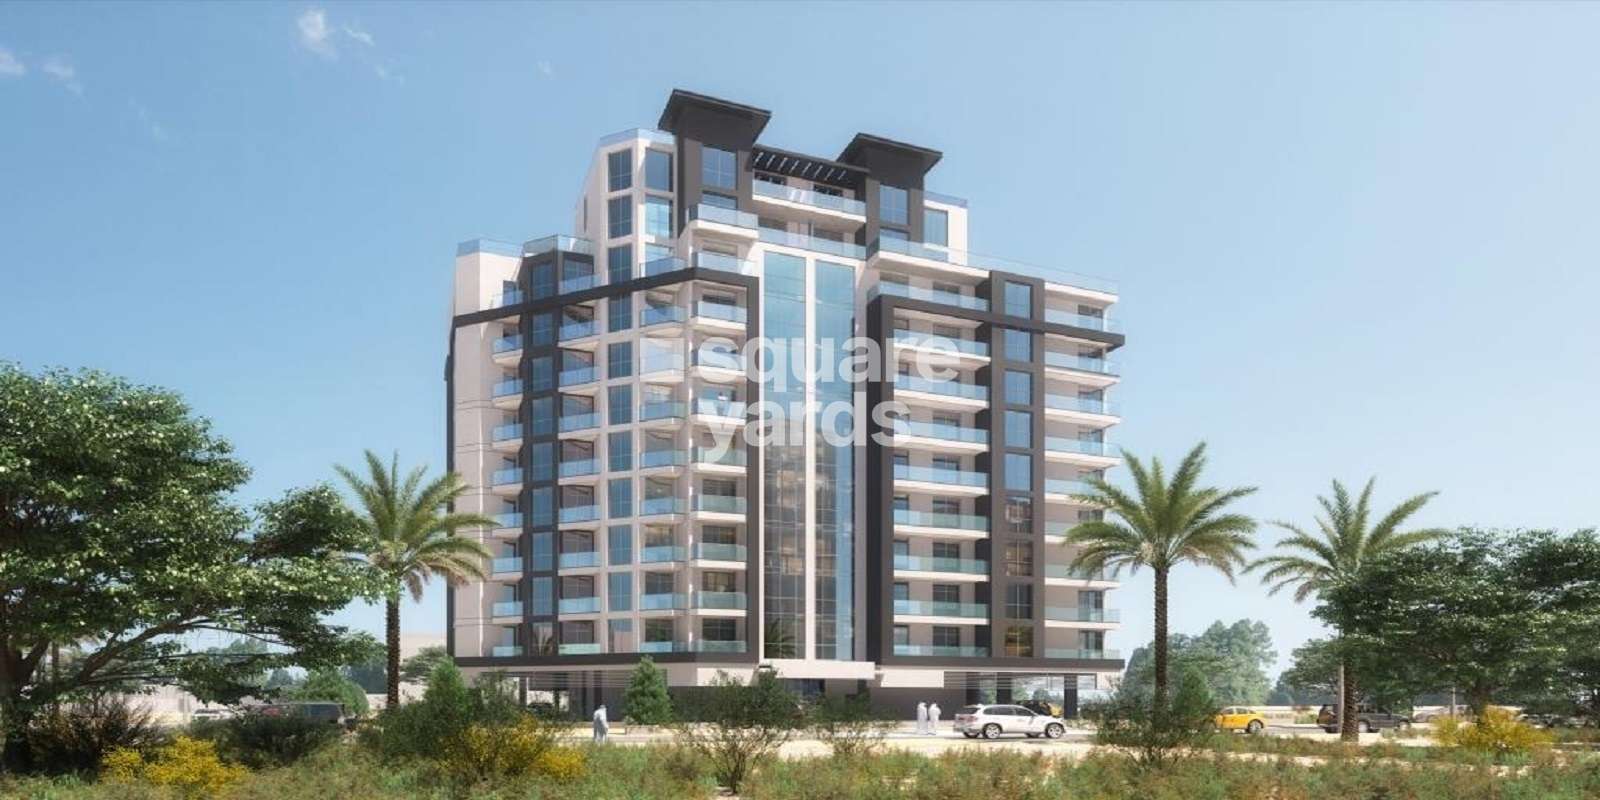 Arabian Edison House Apartments Cover Image